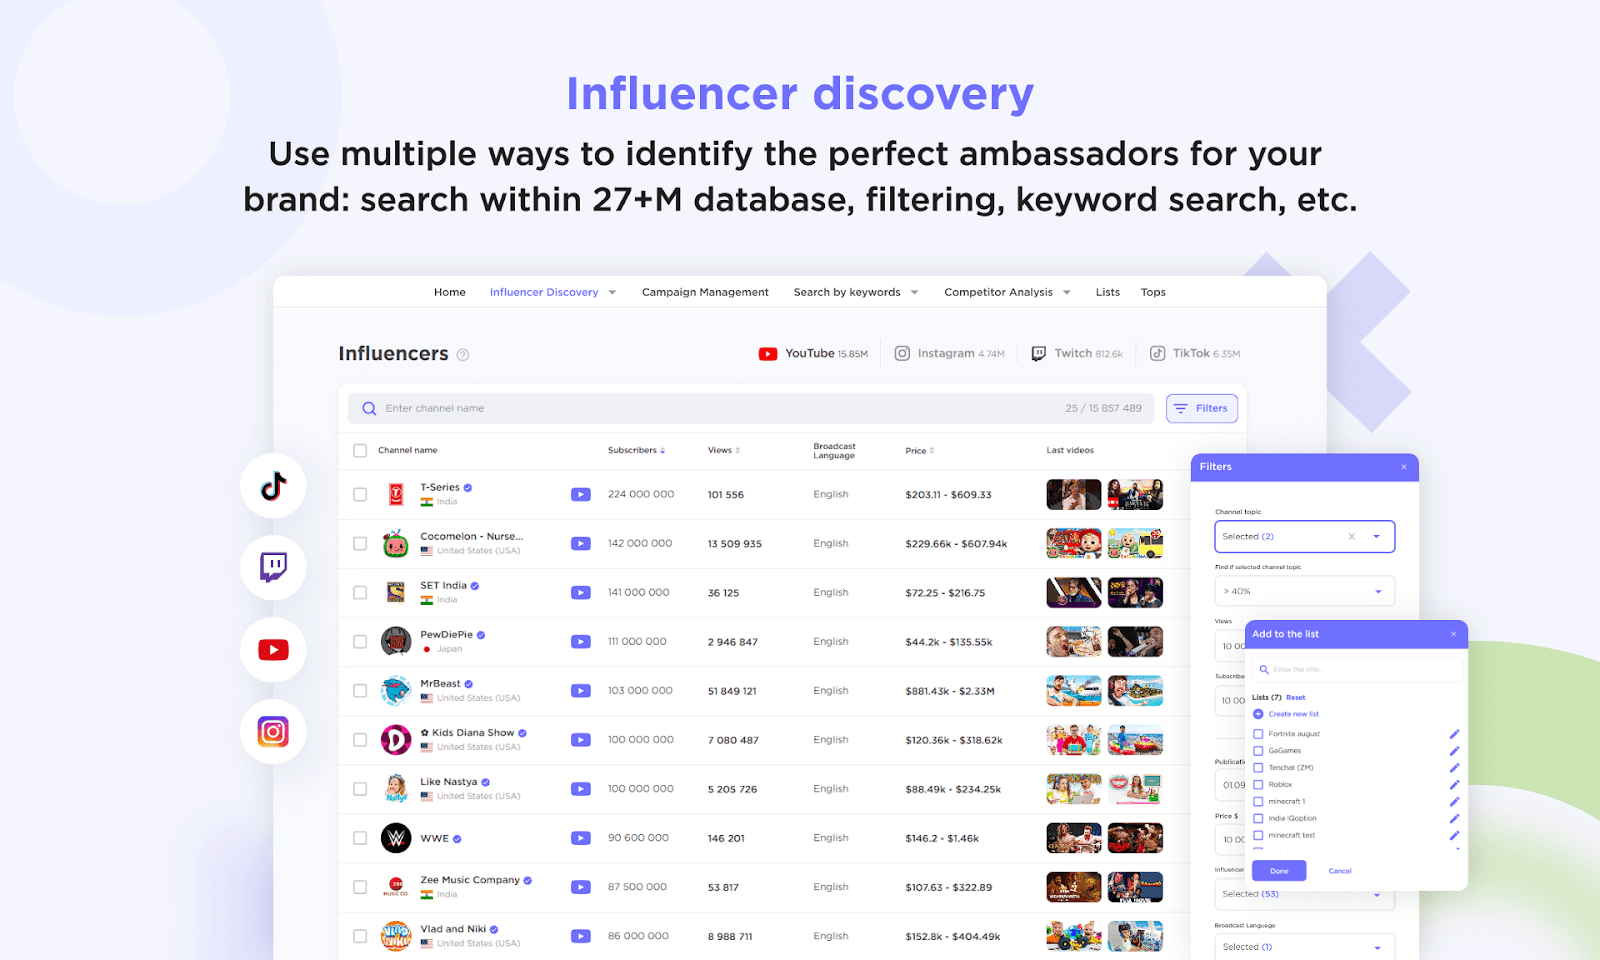 BuzzGuru's "Influencer discovery" page